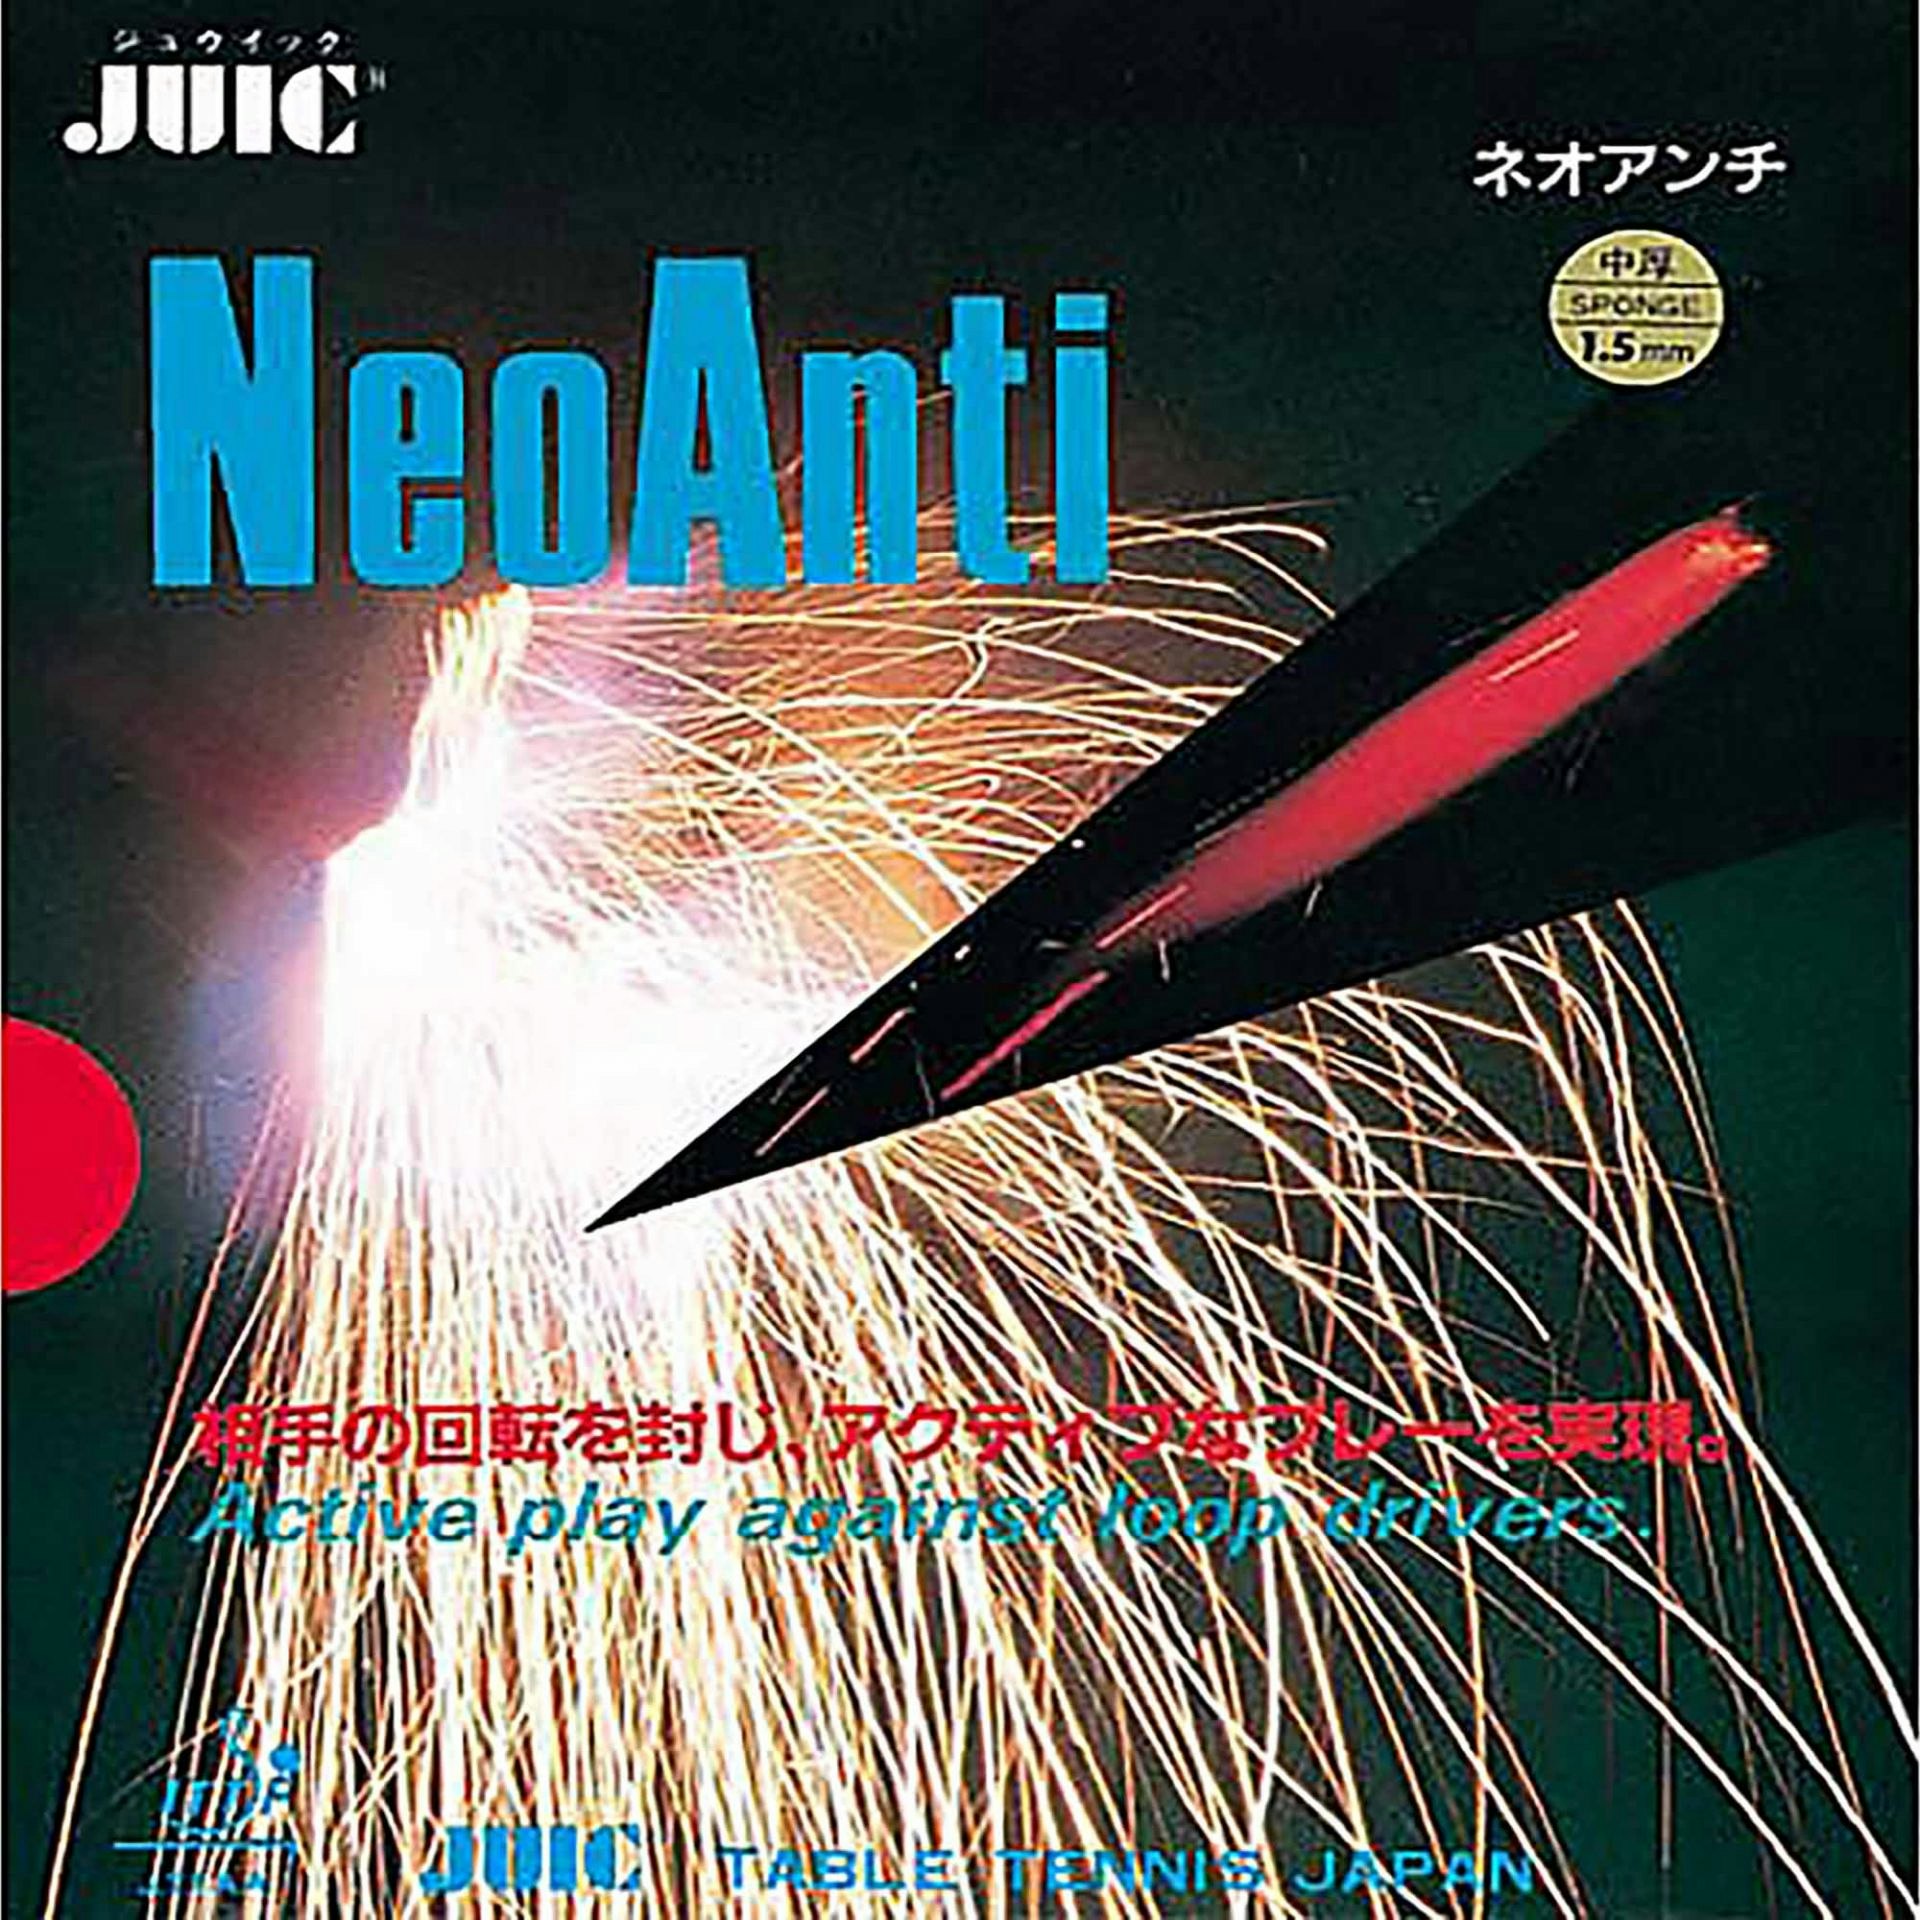 Juic - Neo Anti